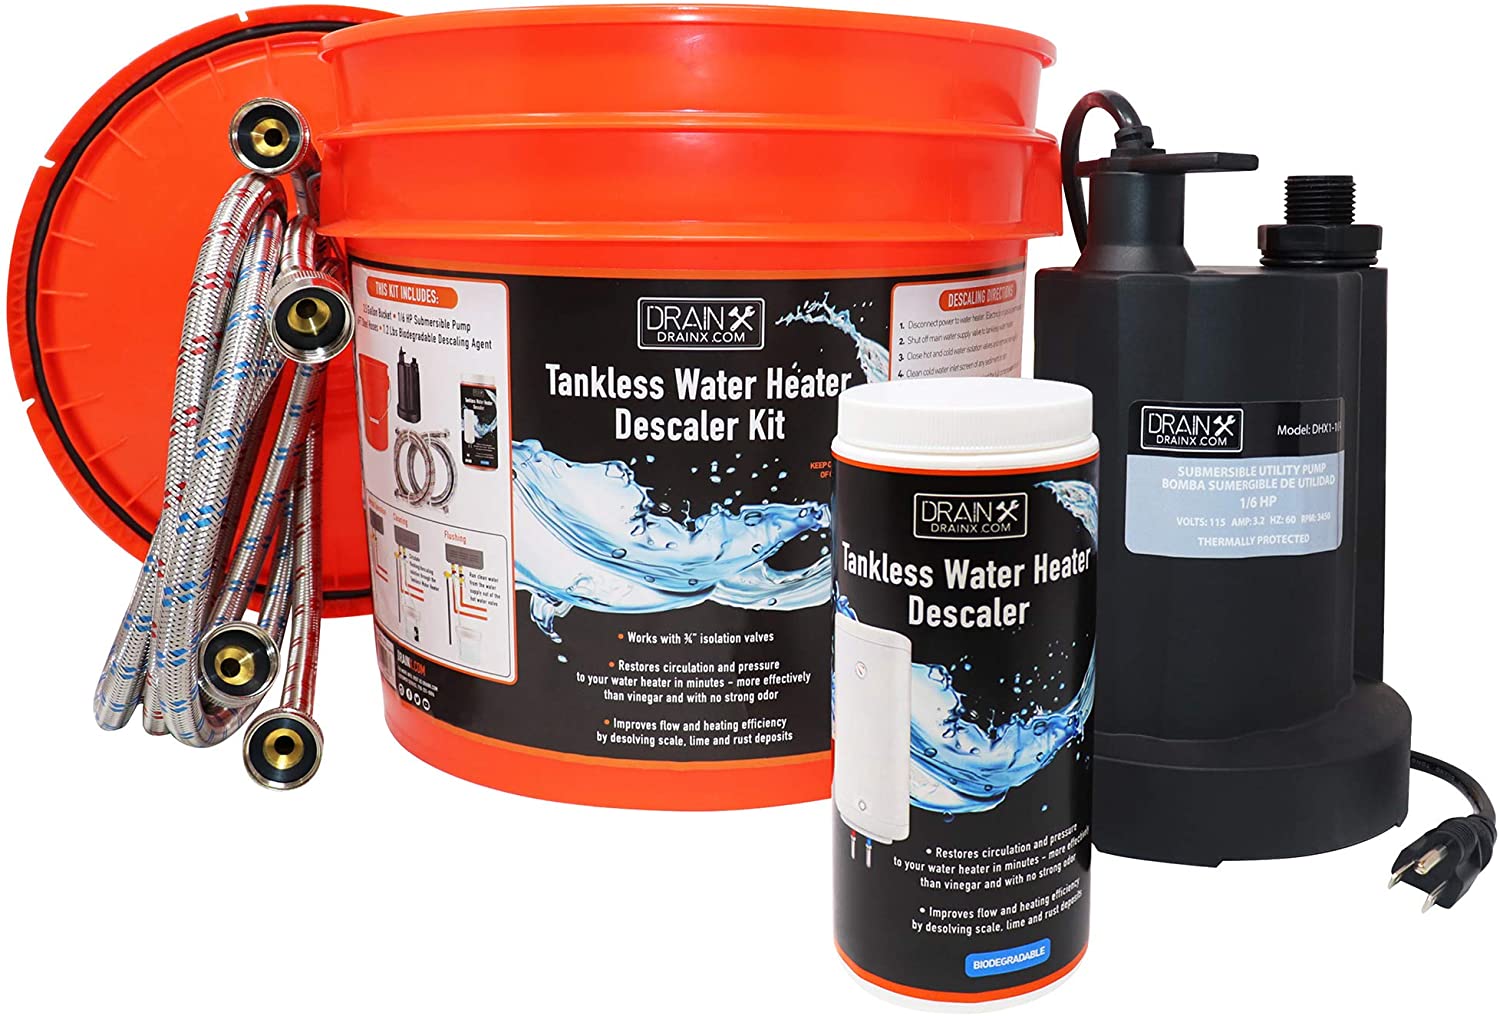 DrainX Tankless Water Heater Descaler Kit